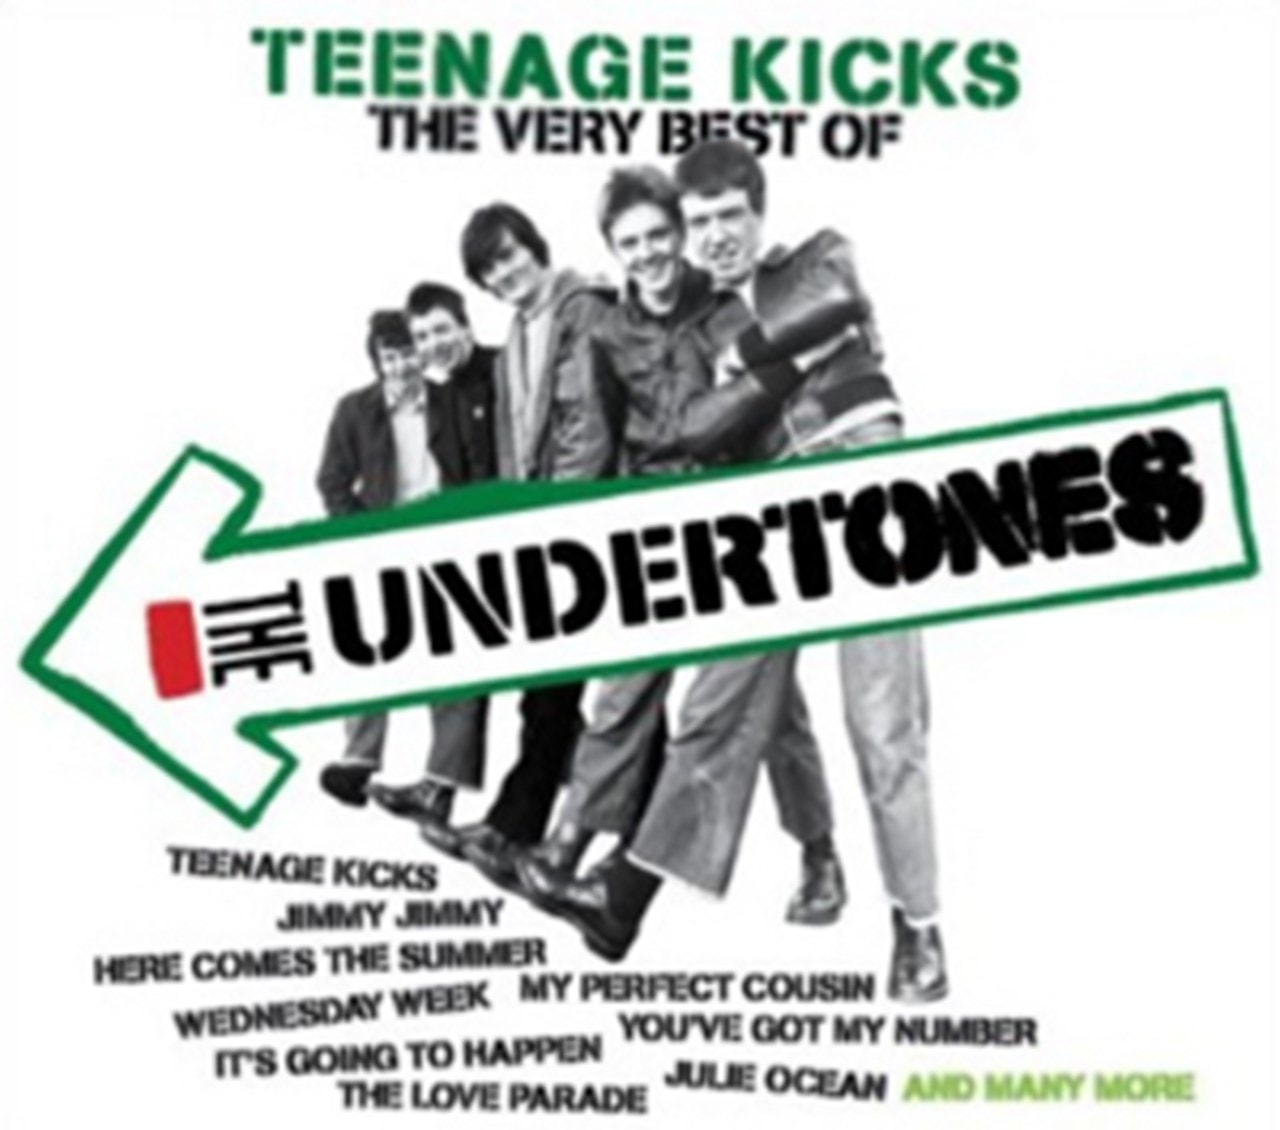 Teenage Kicks: The Very Best of the Undertones | CD Album | Free ...